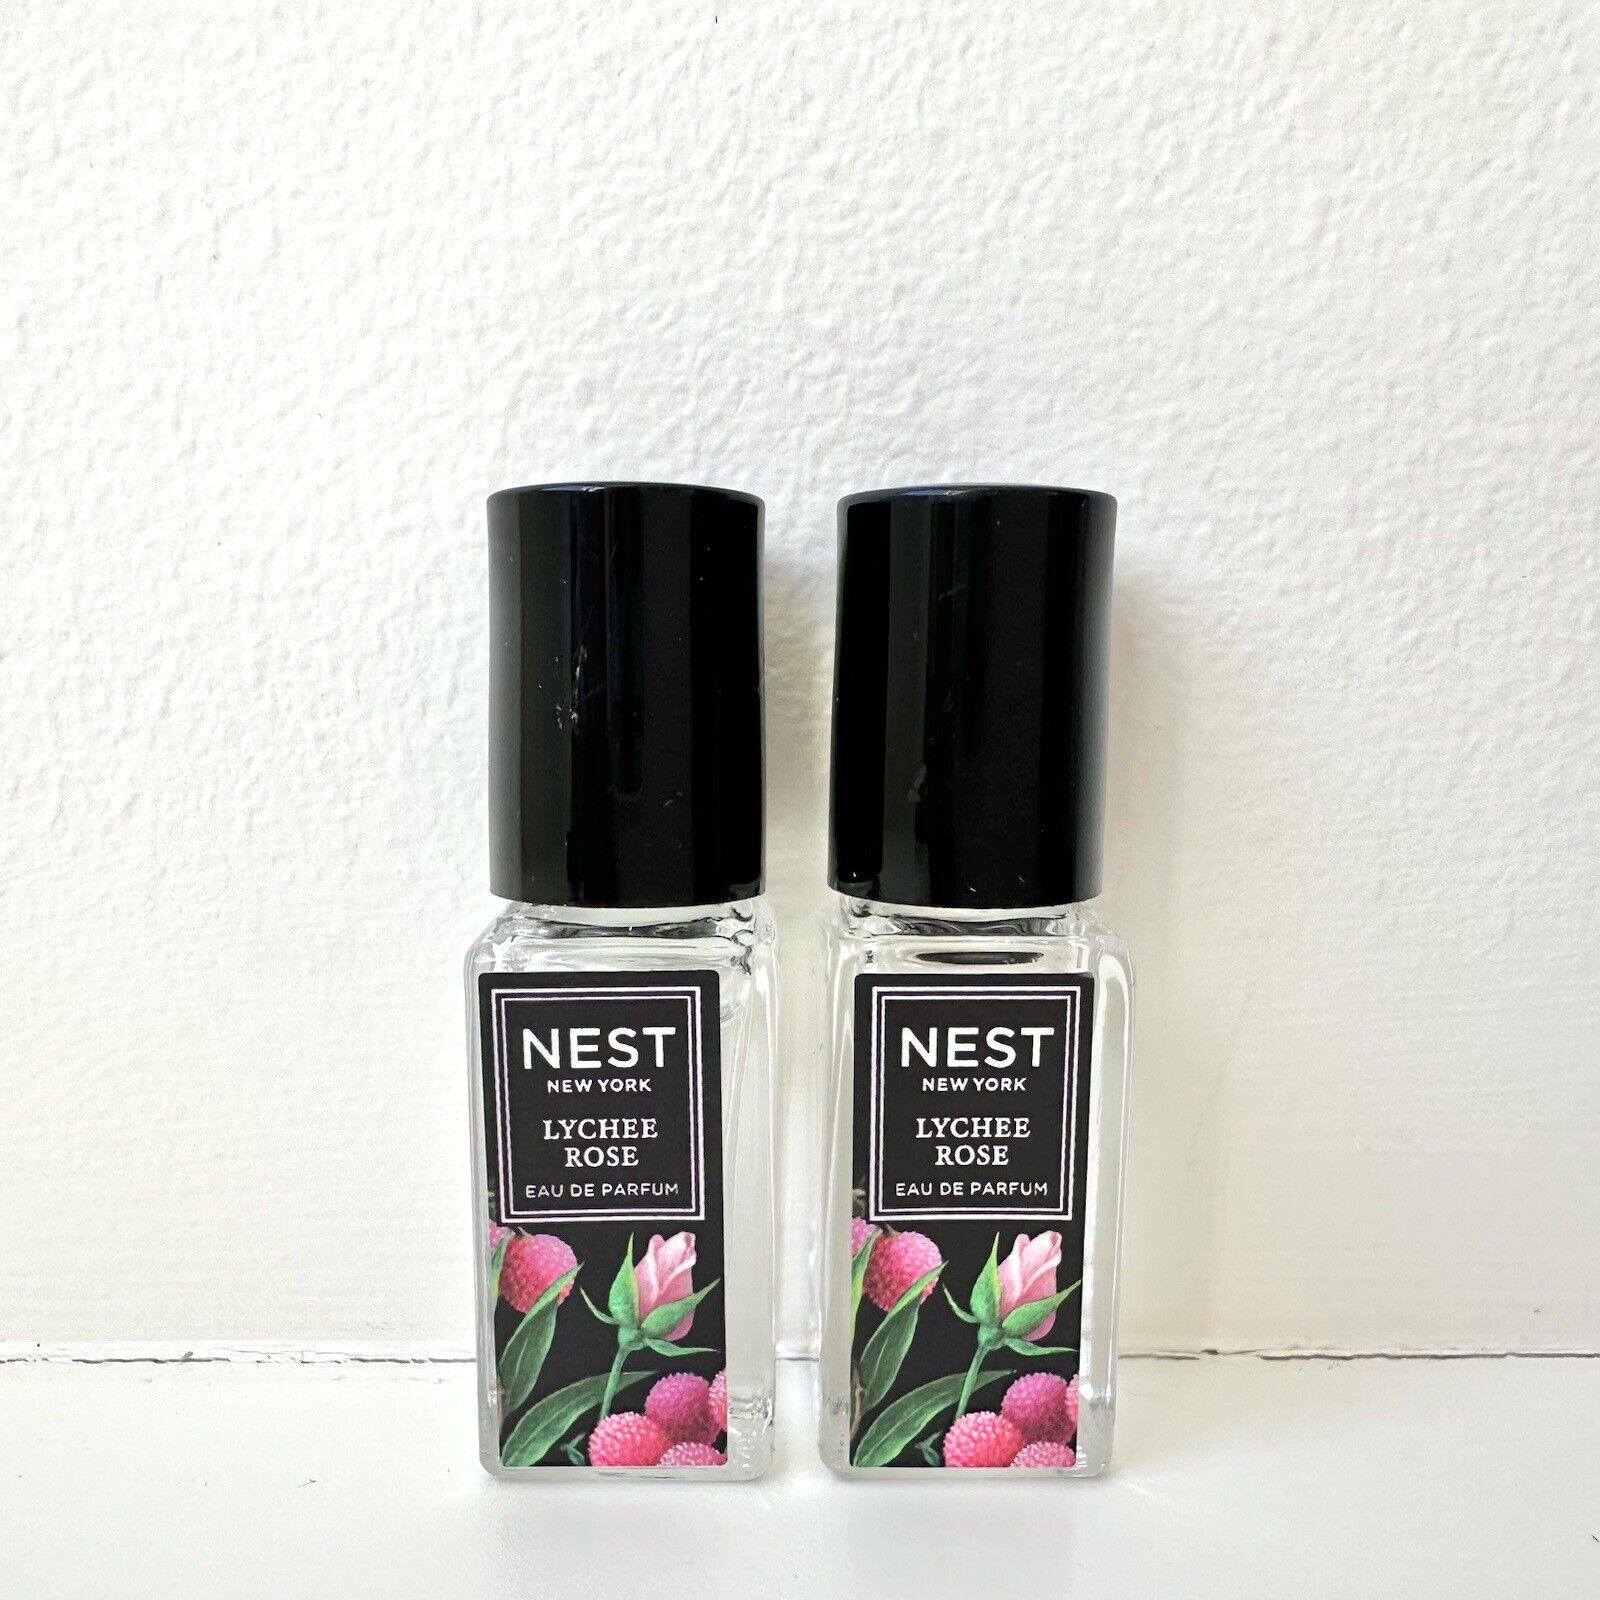 2x NEST New York LYCHEE ROSE Eau De Parfum 0.1oz 3mL Each Travel Minis Perfume